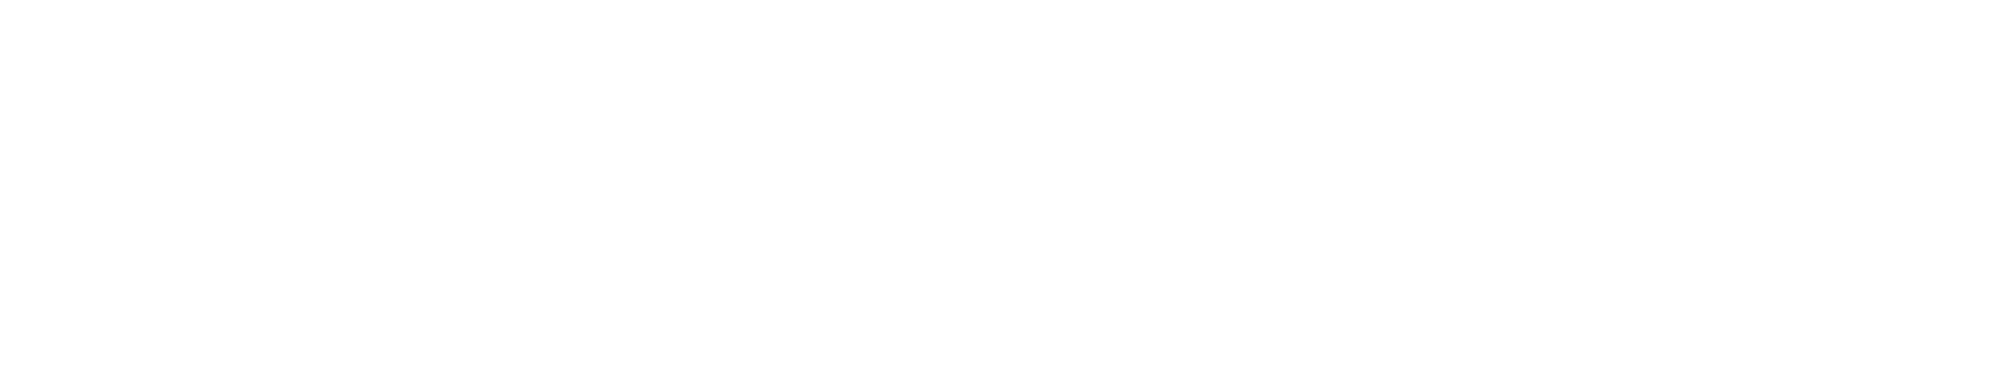 Superior German Shepherd